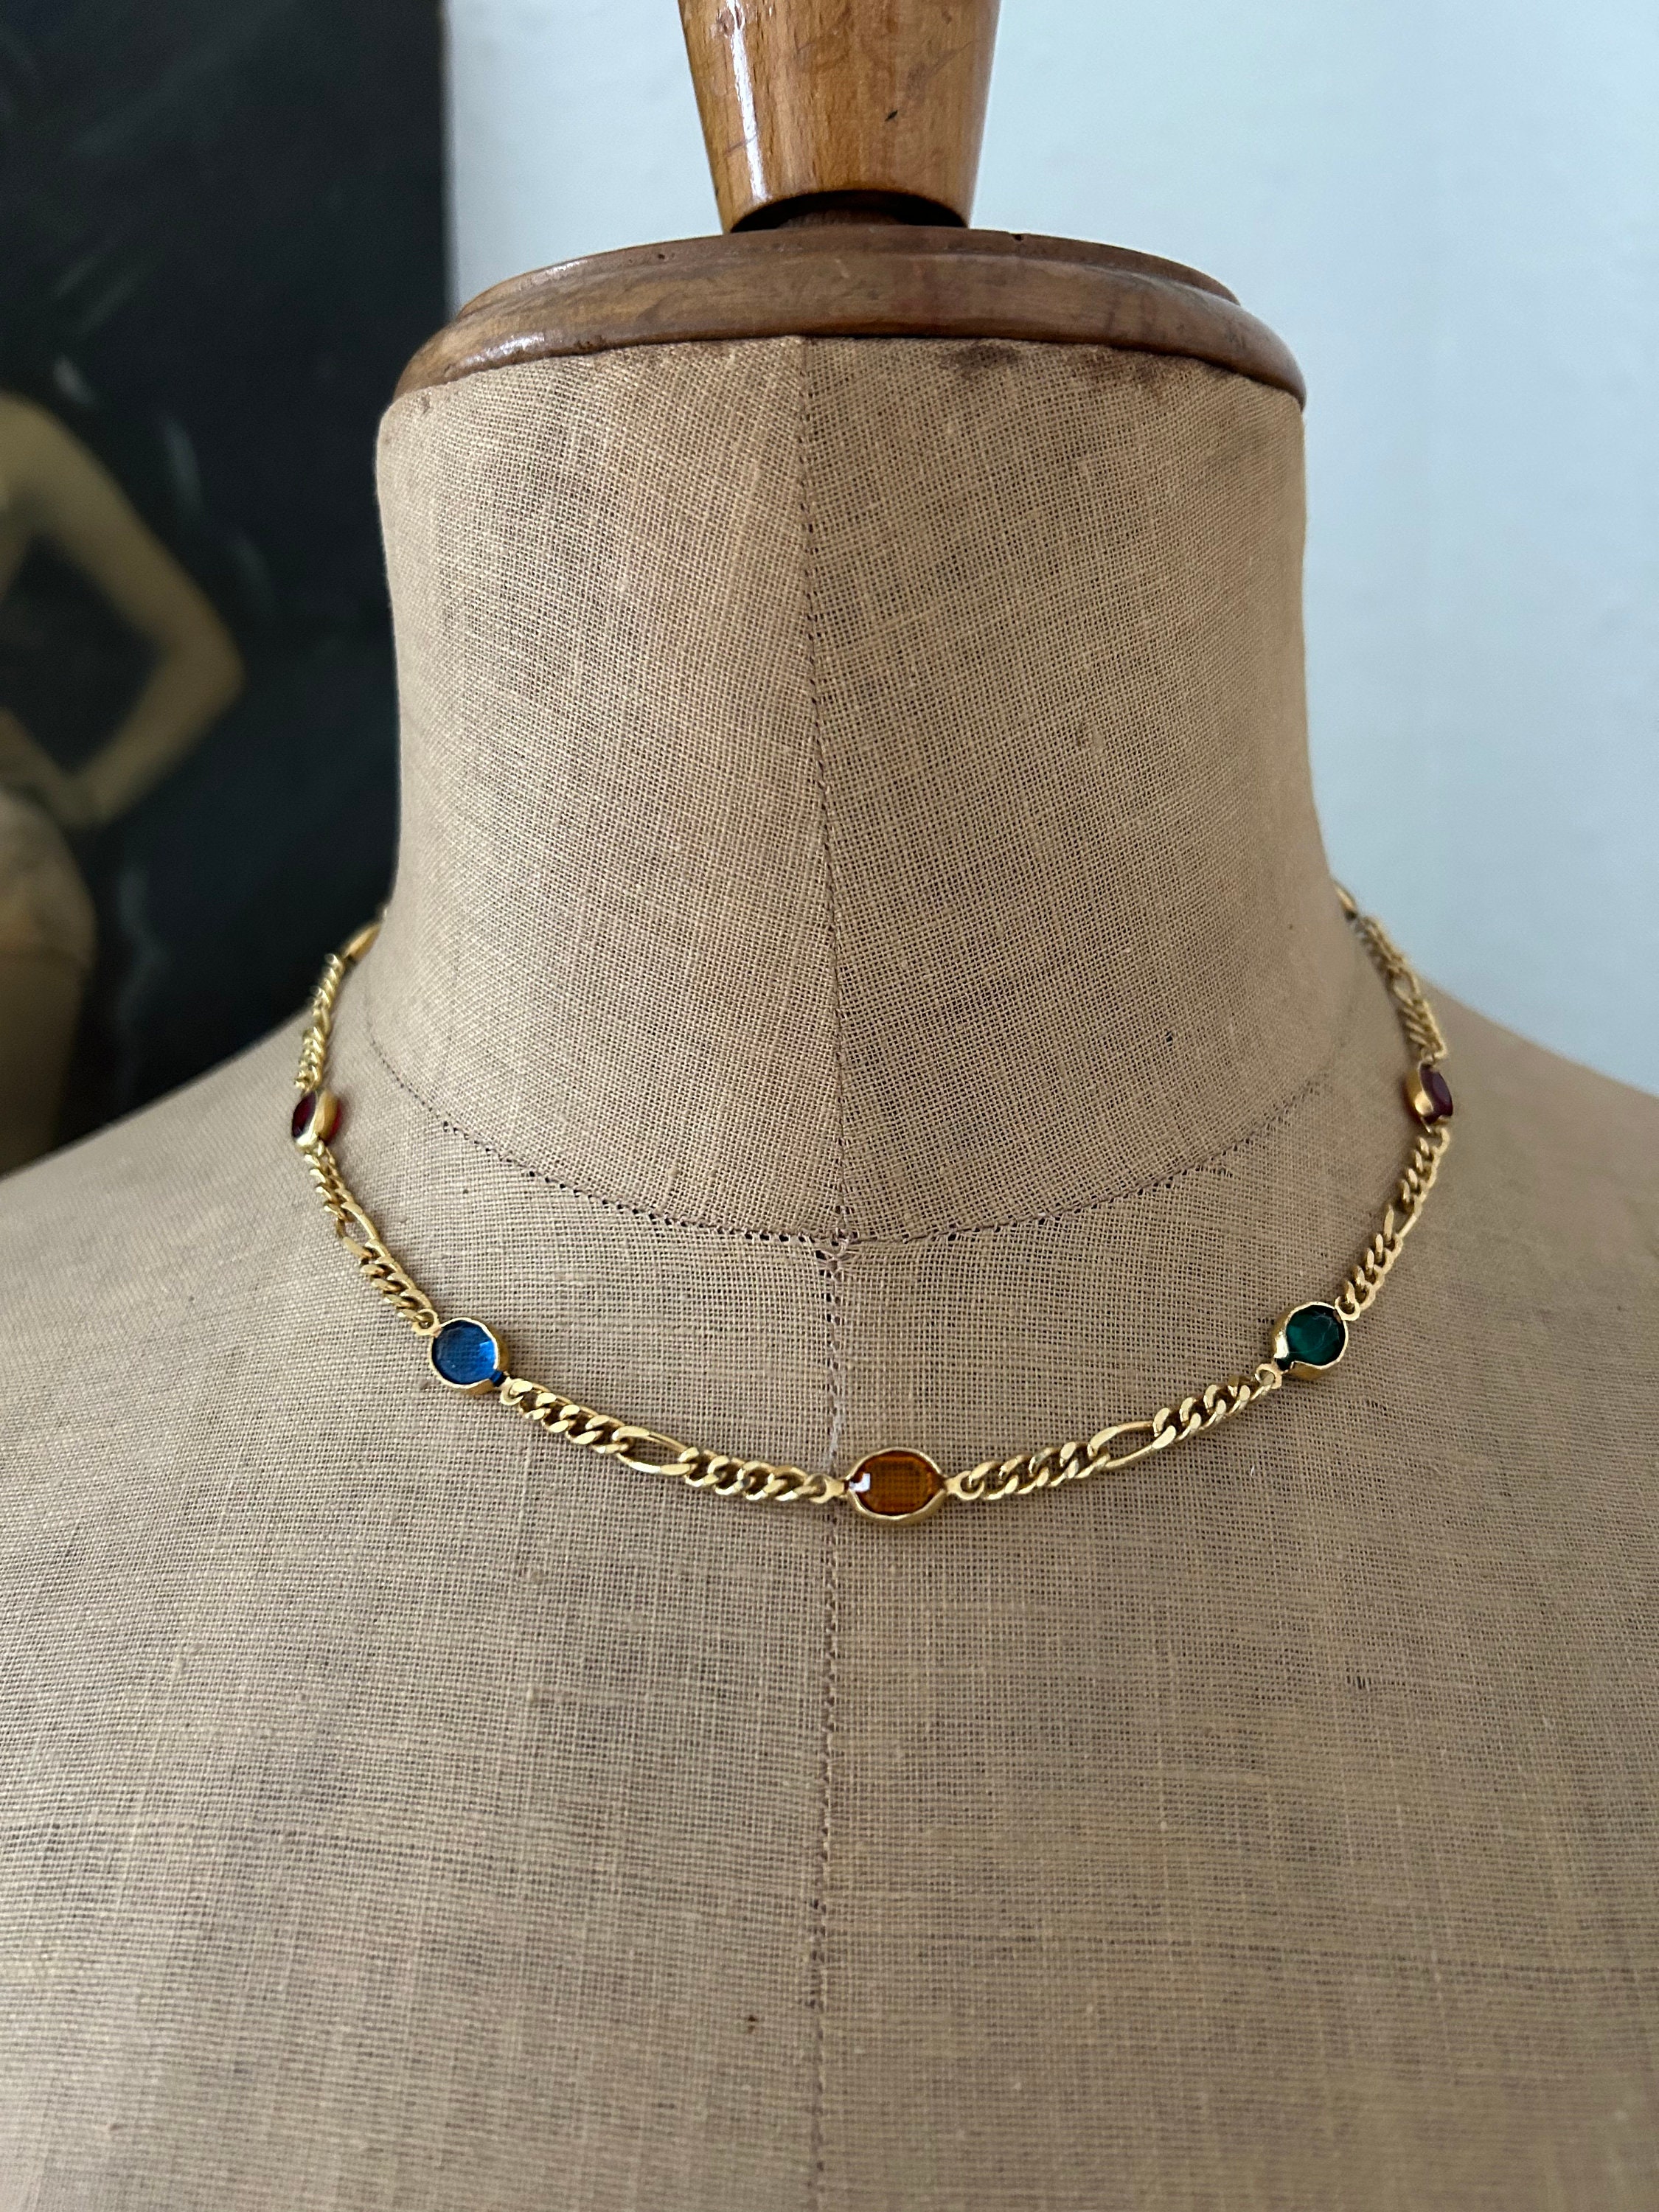 Handmade Gold-Plated Multi-Gemstone Charm Bracelet - Rainbow Bubbles